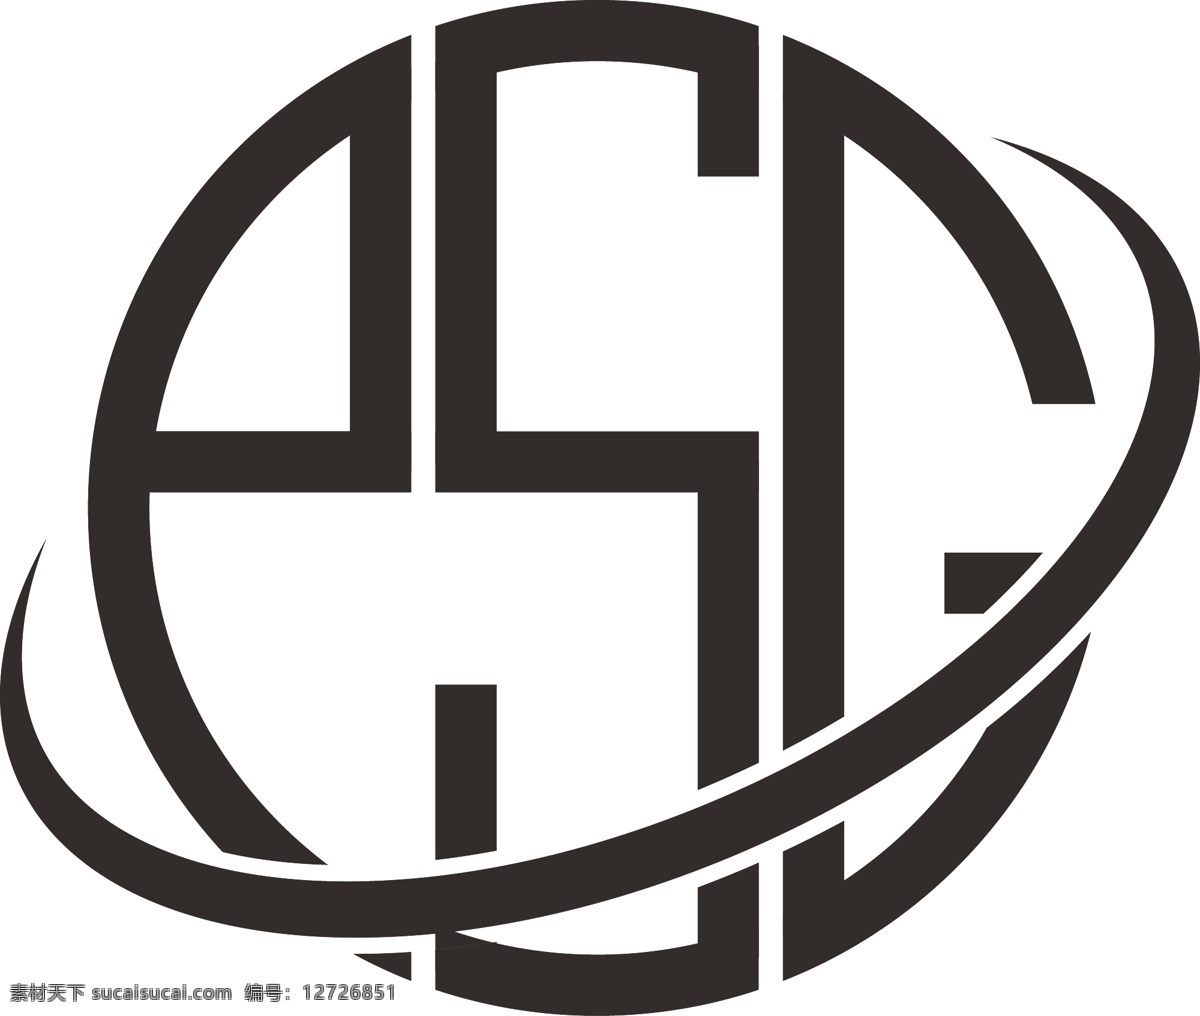 logopsg 字母 标志 logo psg 科技标志 标识 vi